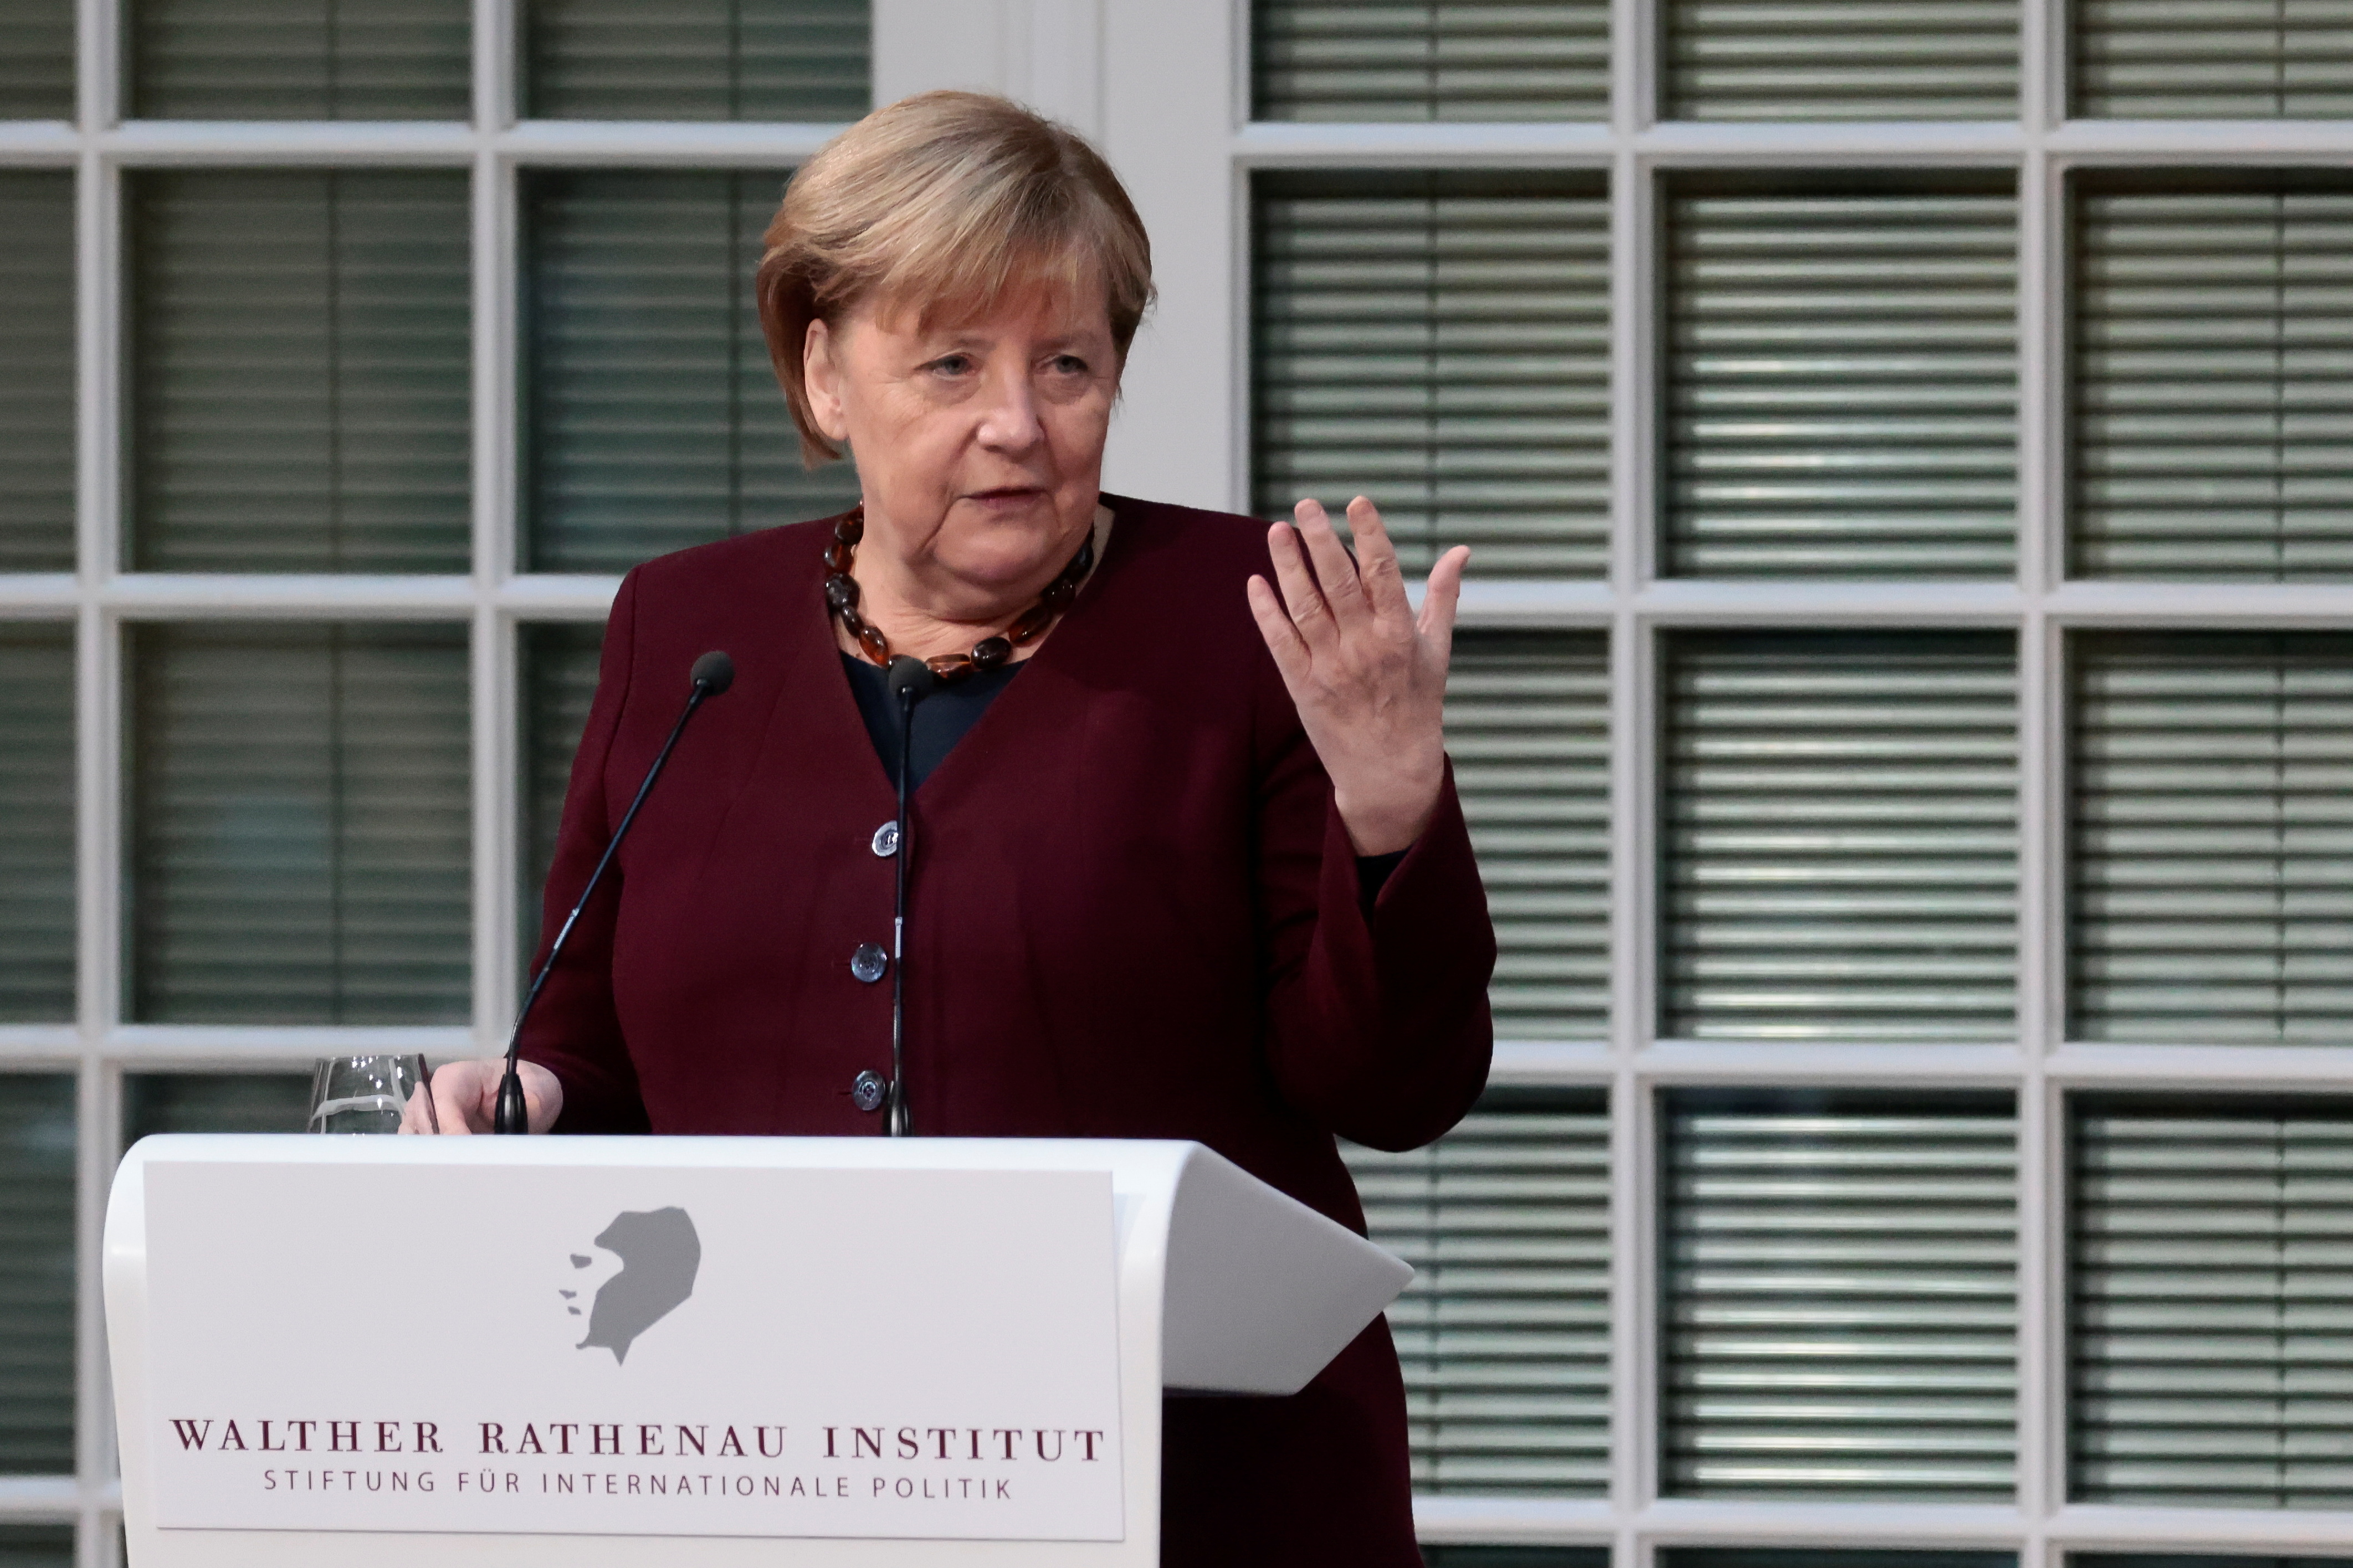 German Chancellor Merkel speaks after receiving the Walther-Rathenau Award, in Berlin, Germany, November 5, 2021. REUTERS/Hannibal Hanschke